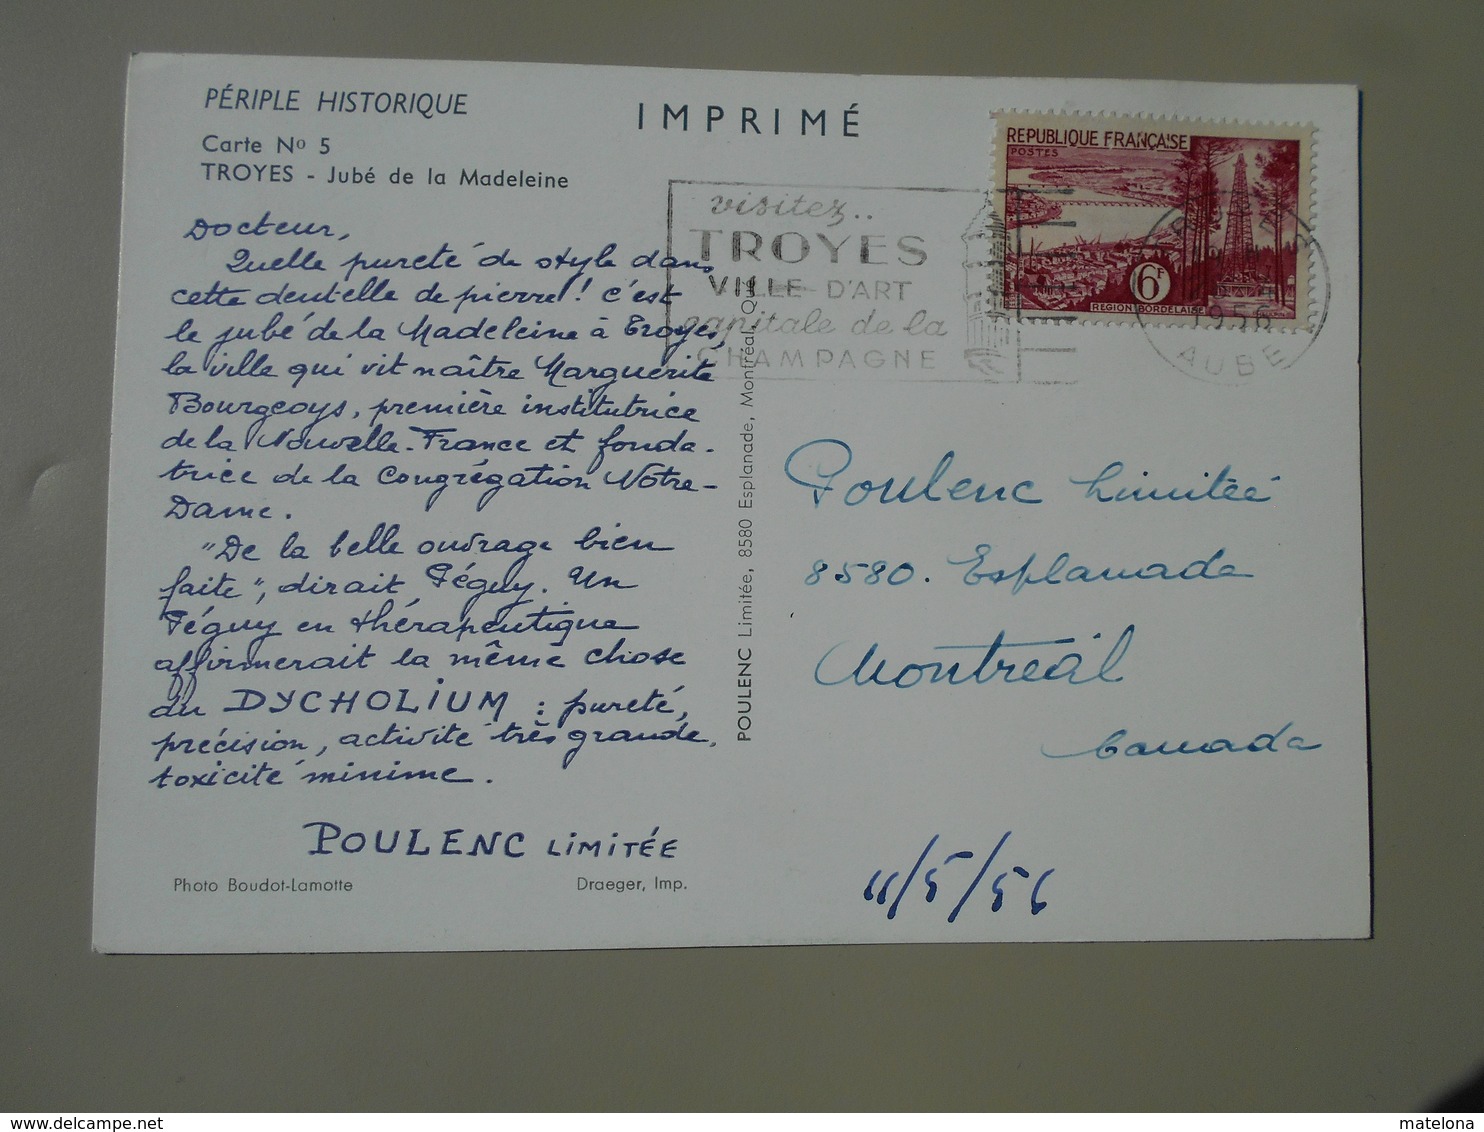 AUBE TROYES JUBE DE LA MADELEINE CARTE No 5 PERIPLE HISTORIQUE - Troyes